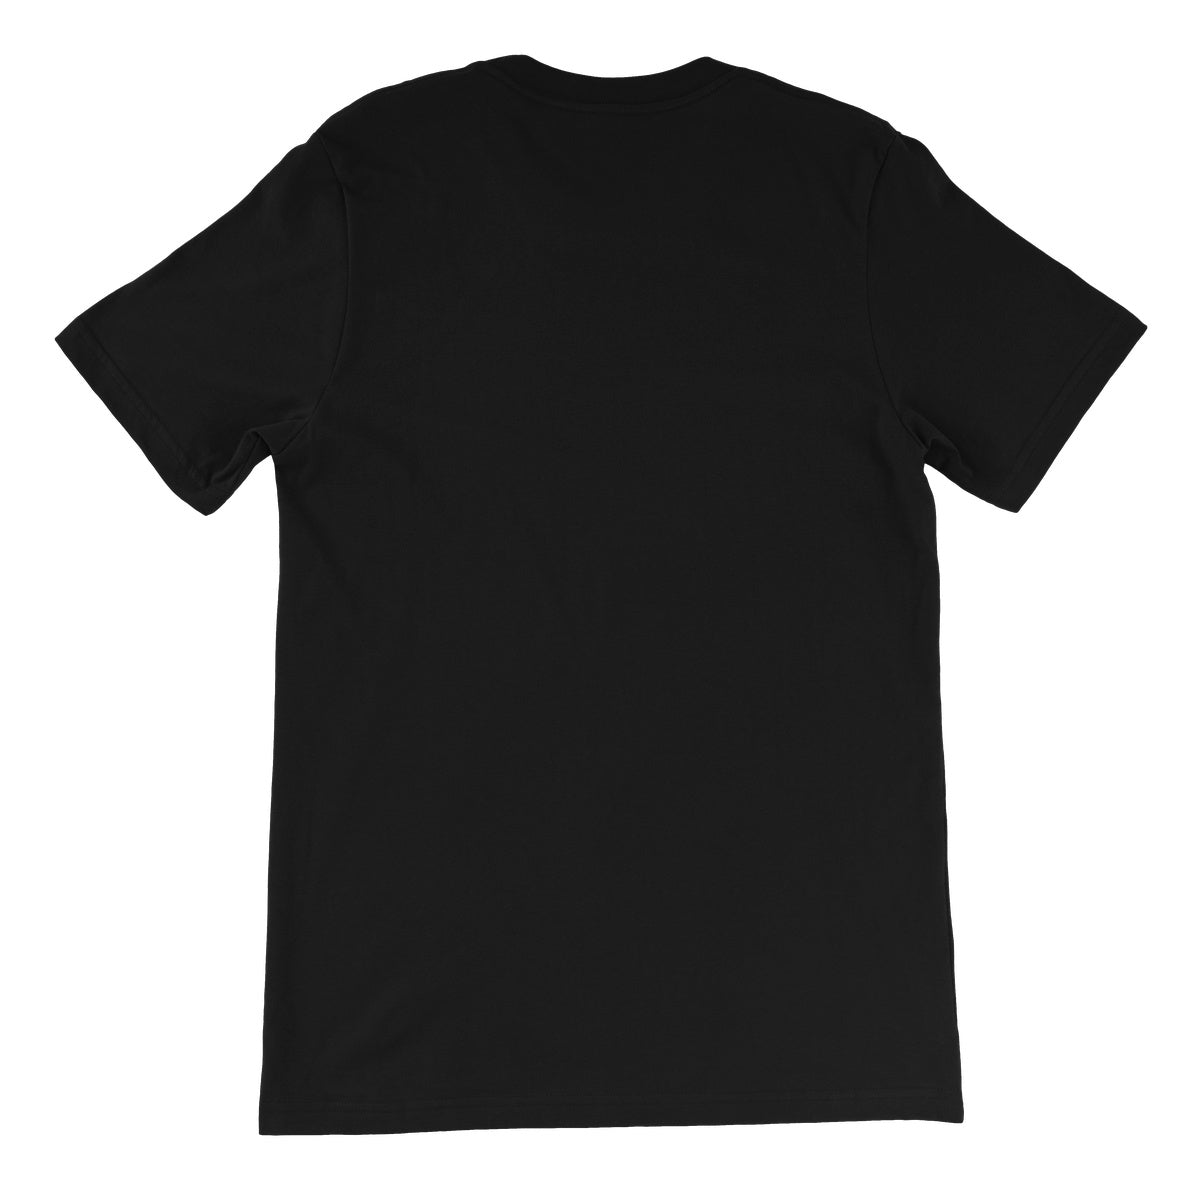 Bound For Glory 2020 - Event Unisex Short Sleeve T-Shirt